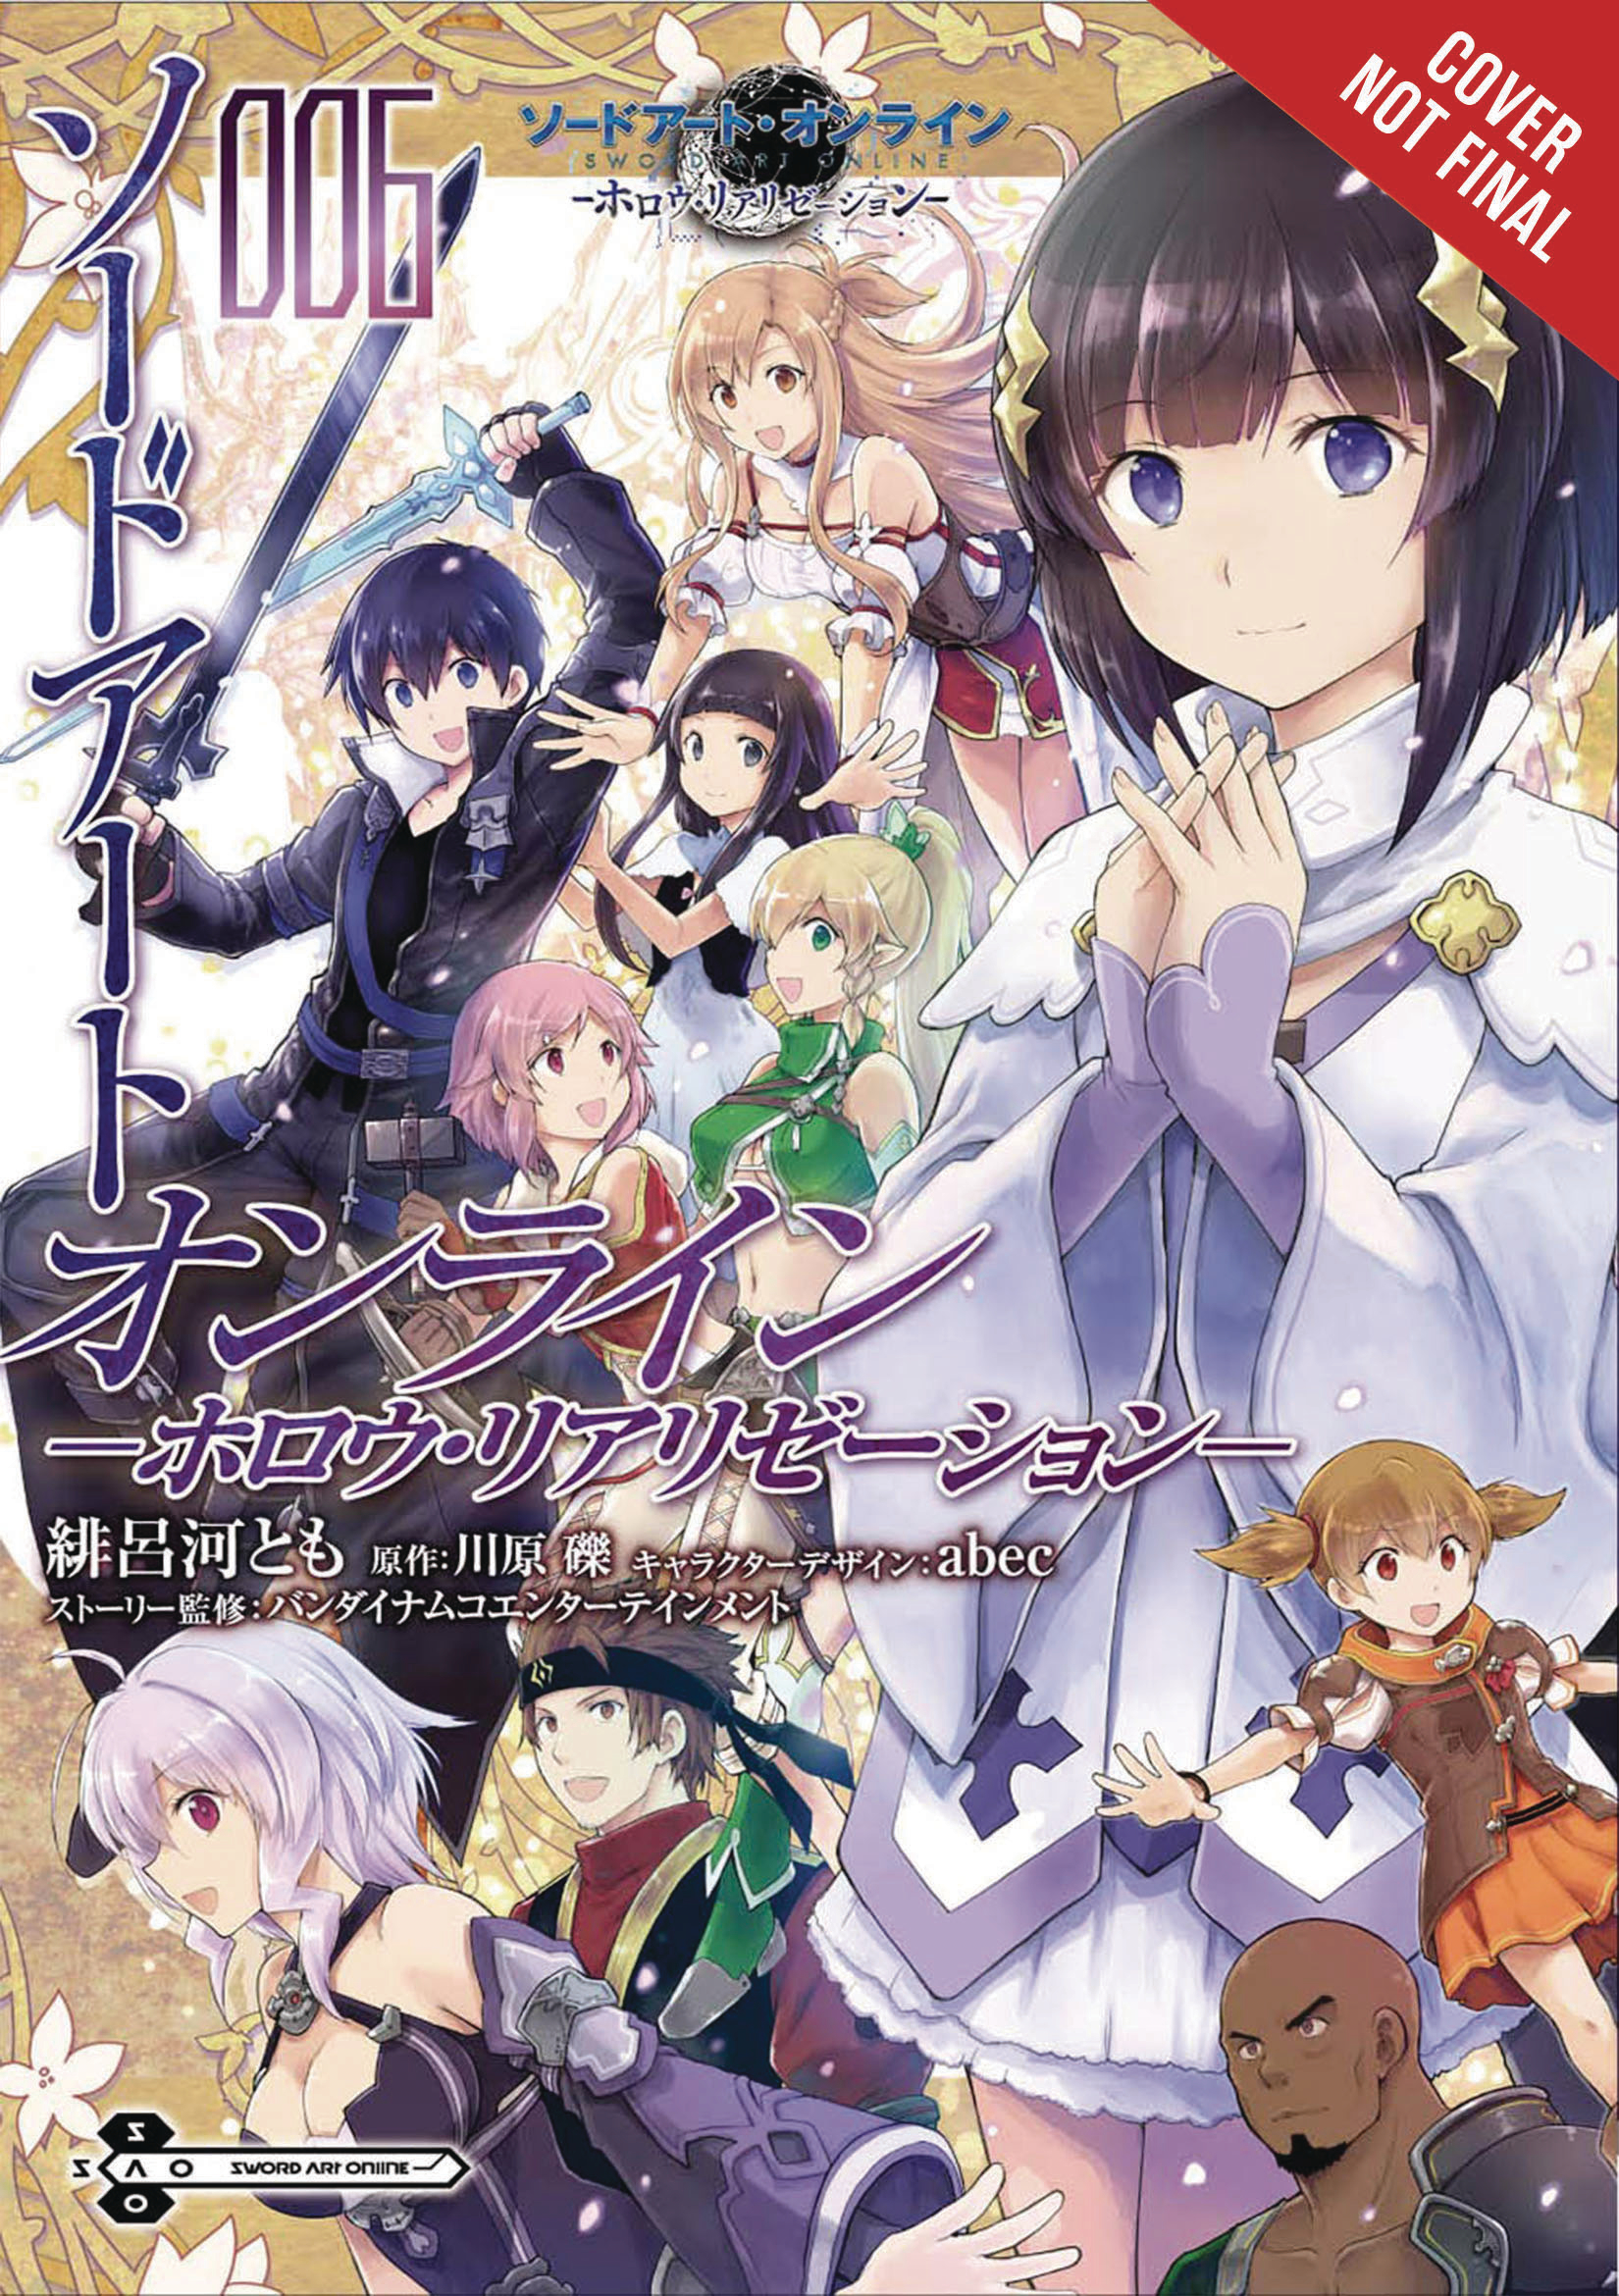 Sword Art Online Hollow Realization Manga Volume 6